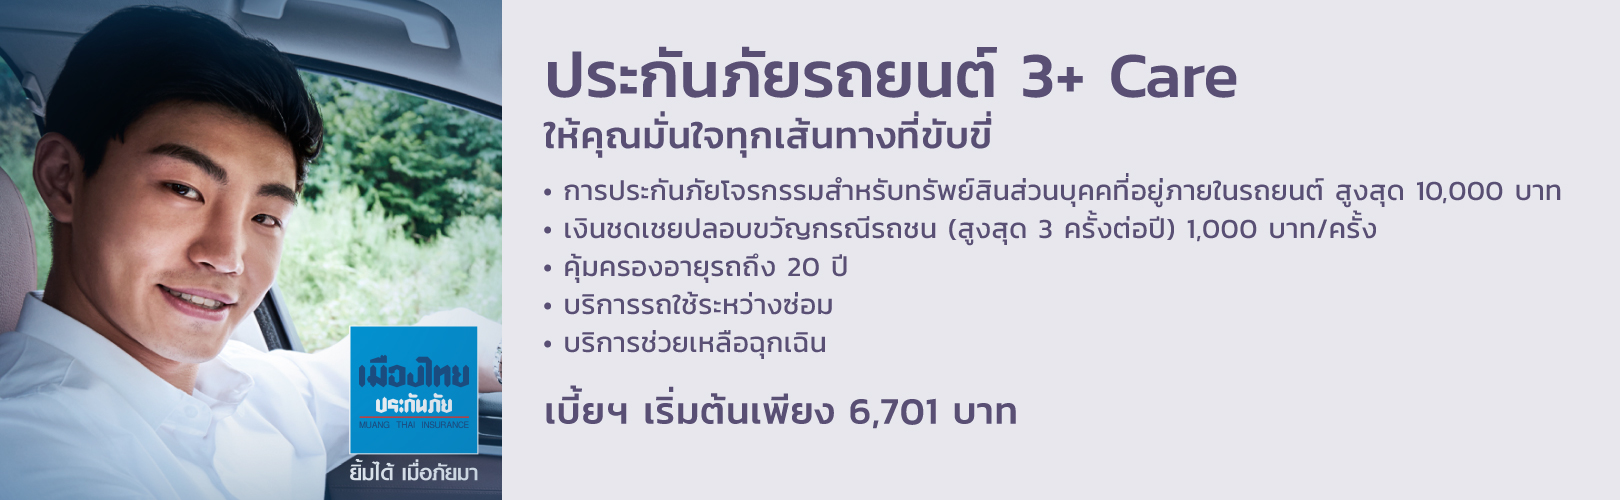 Muang_Thai_Insurance_3+_1620x500